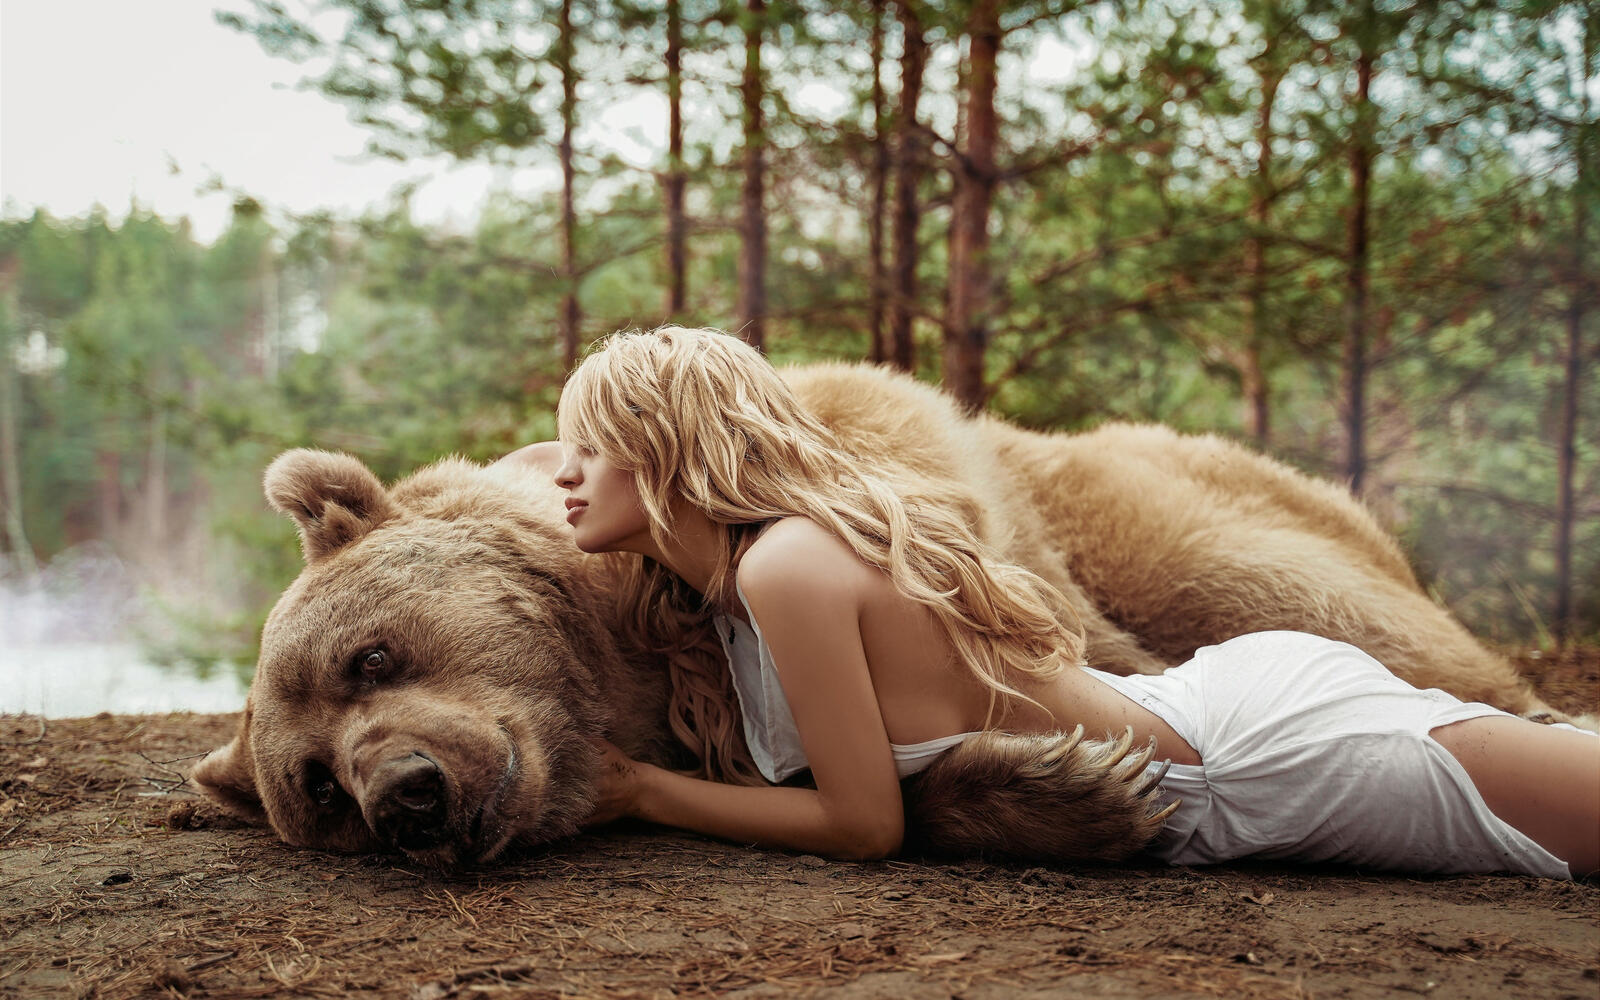 Бесплатное фото Девушка лежит с медведем на берегу озера